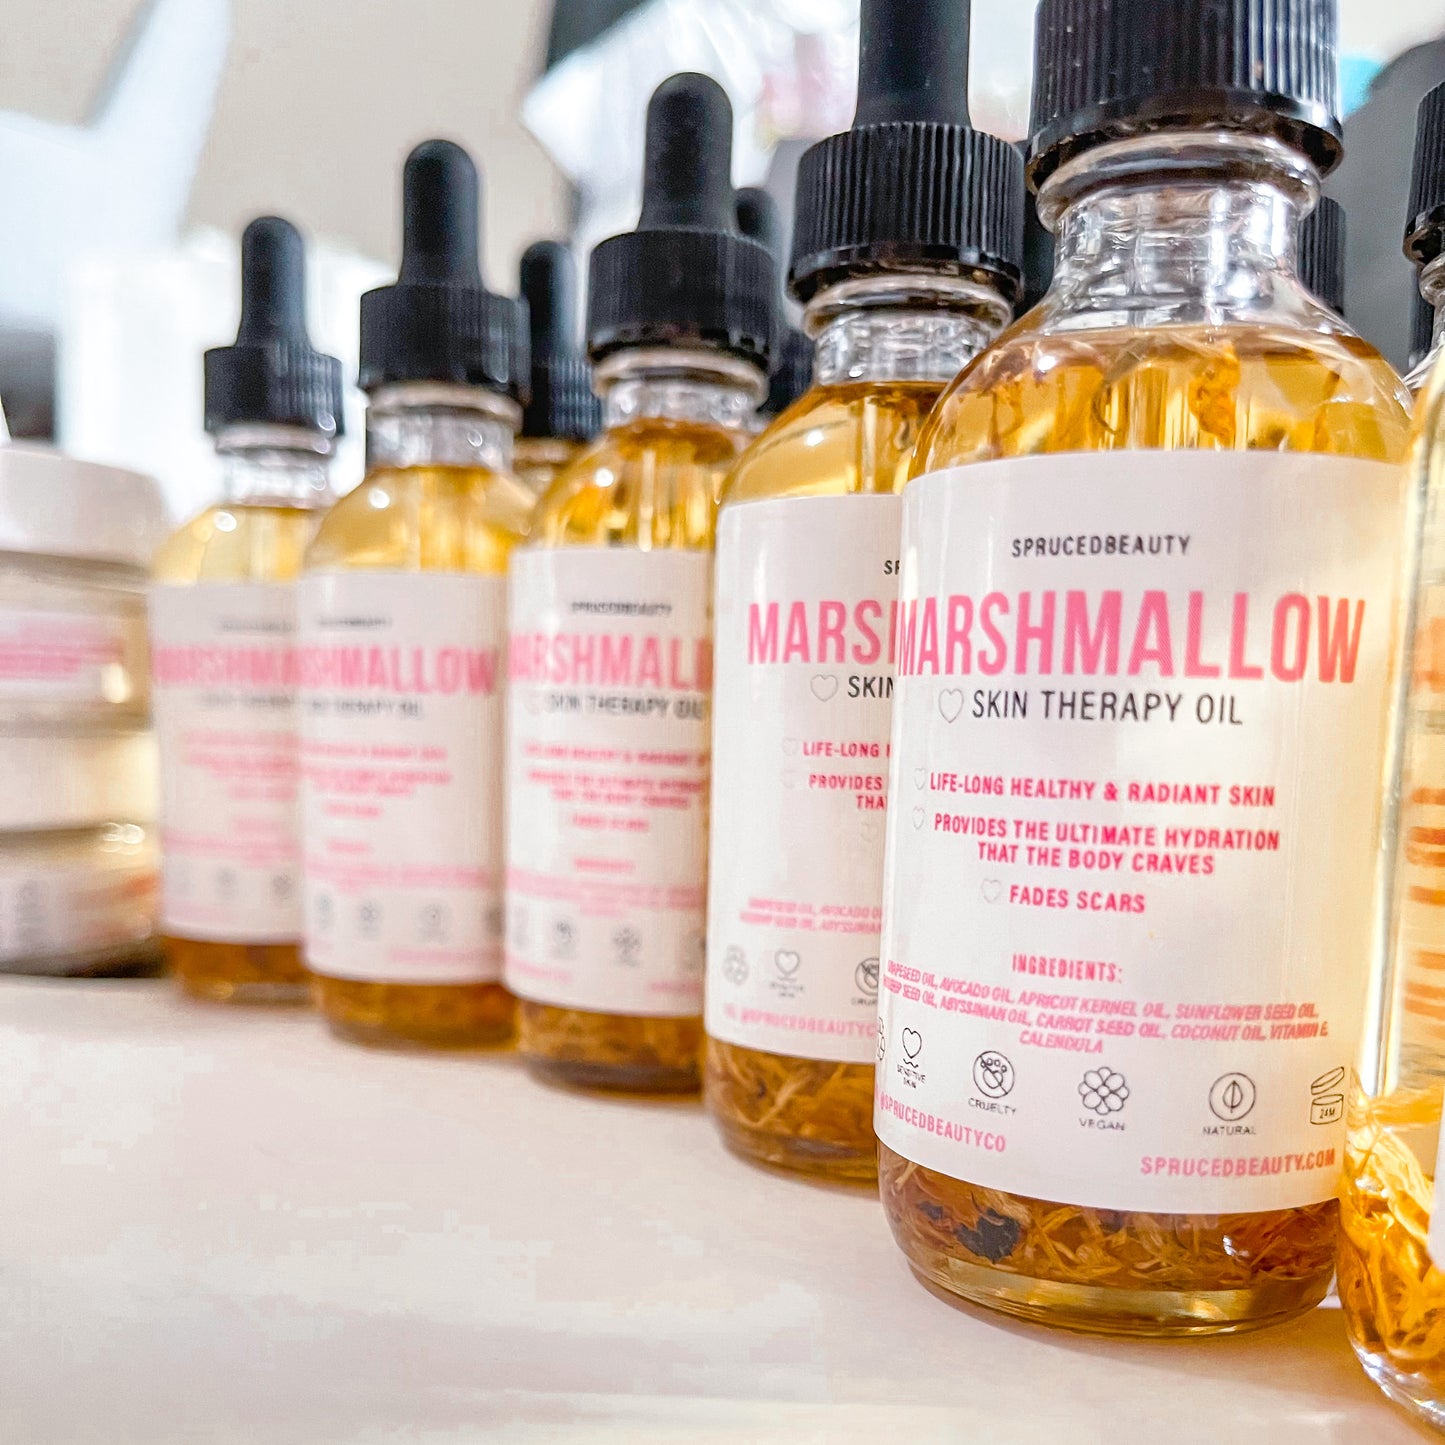 Marshmallow Skin Therapy Oil